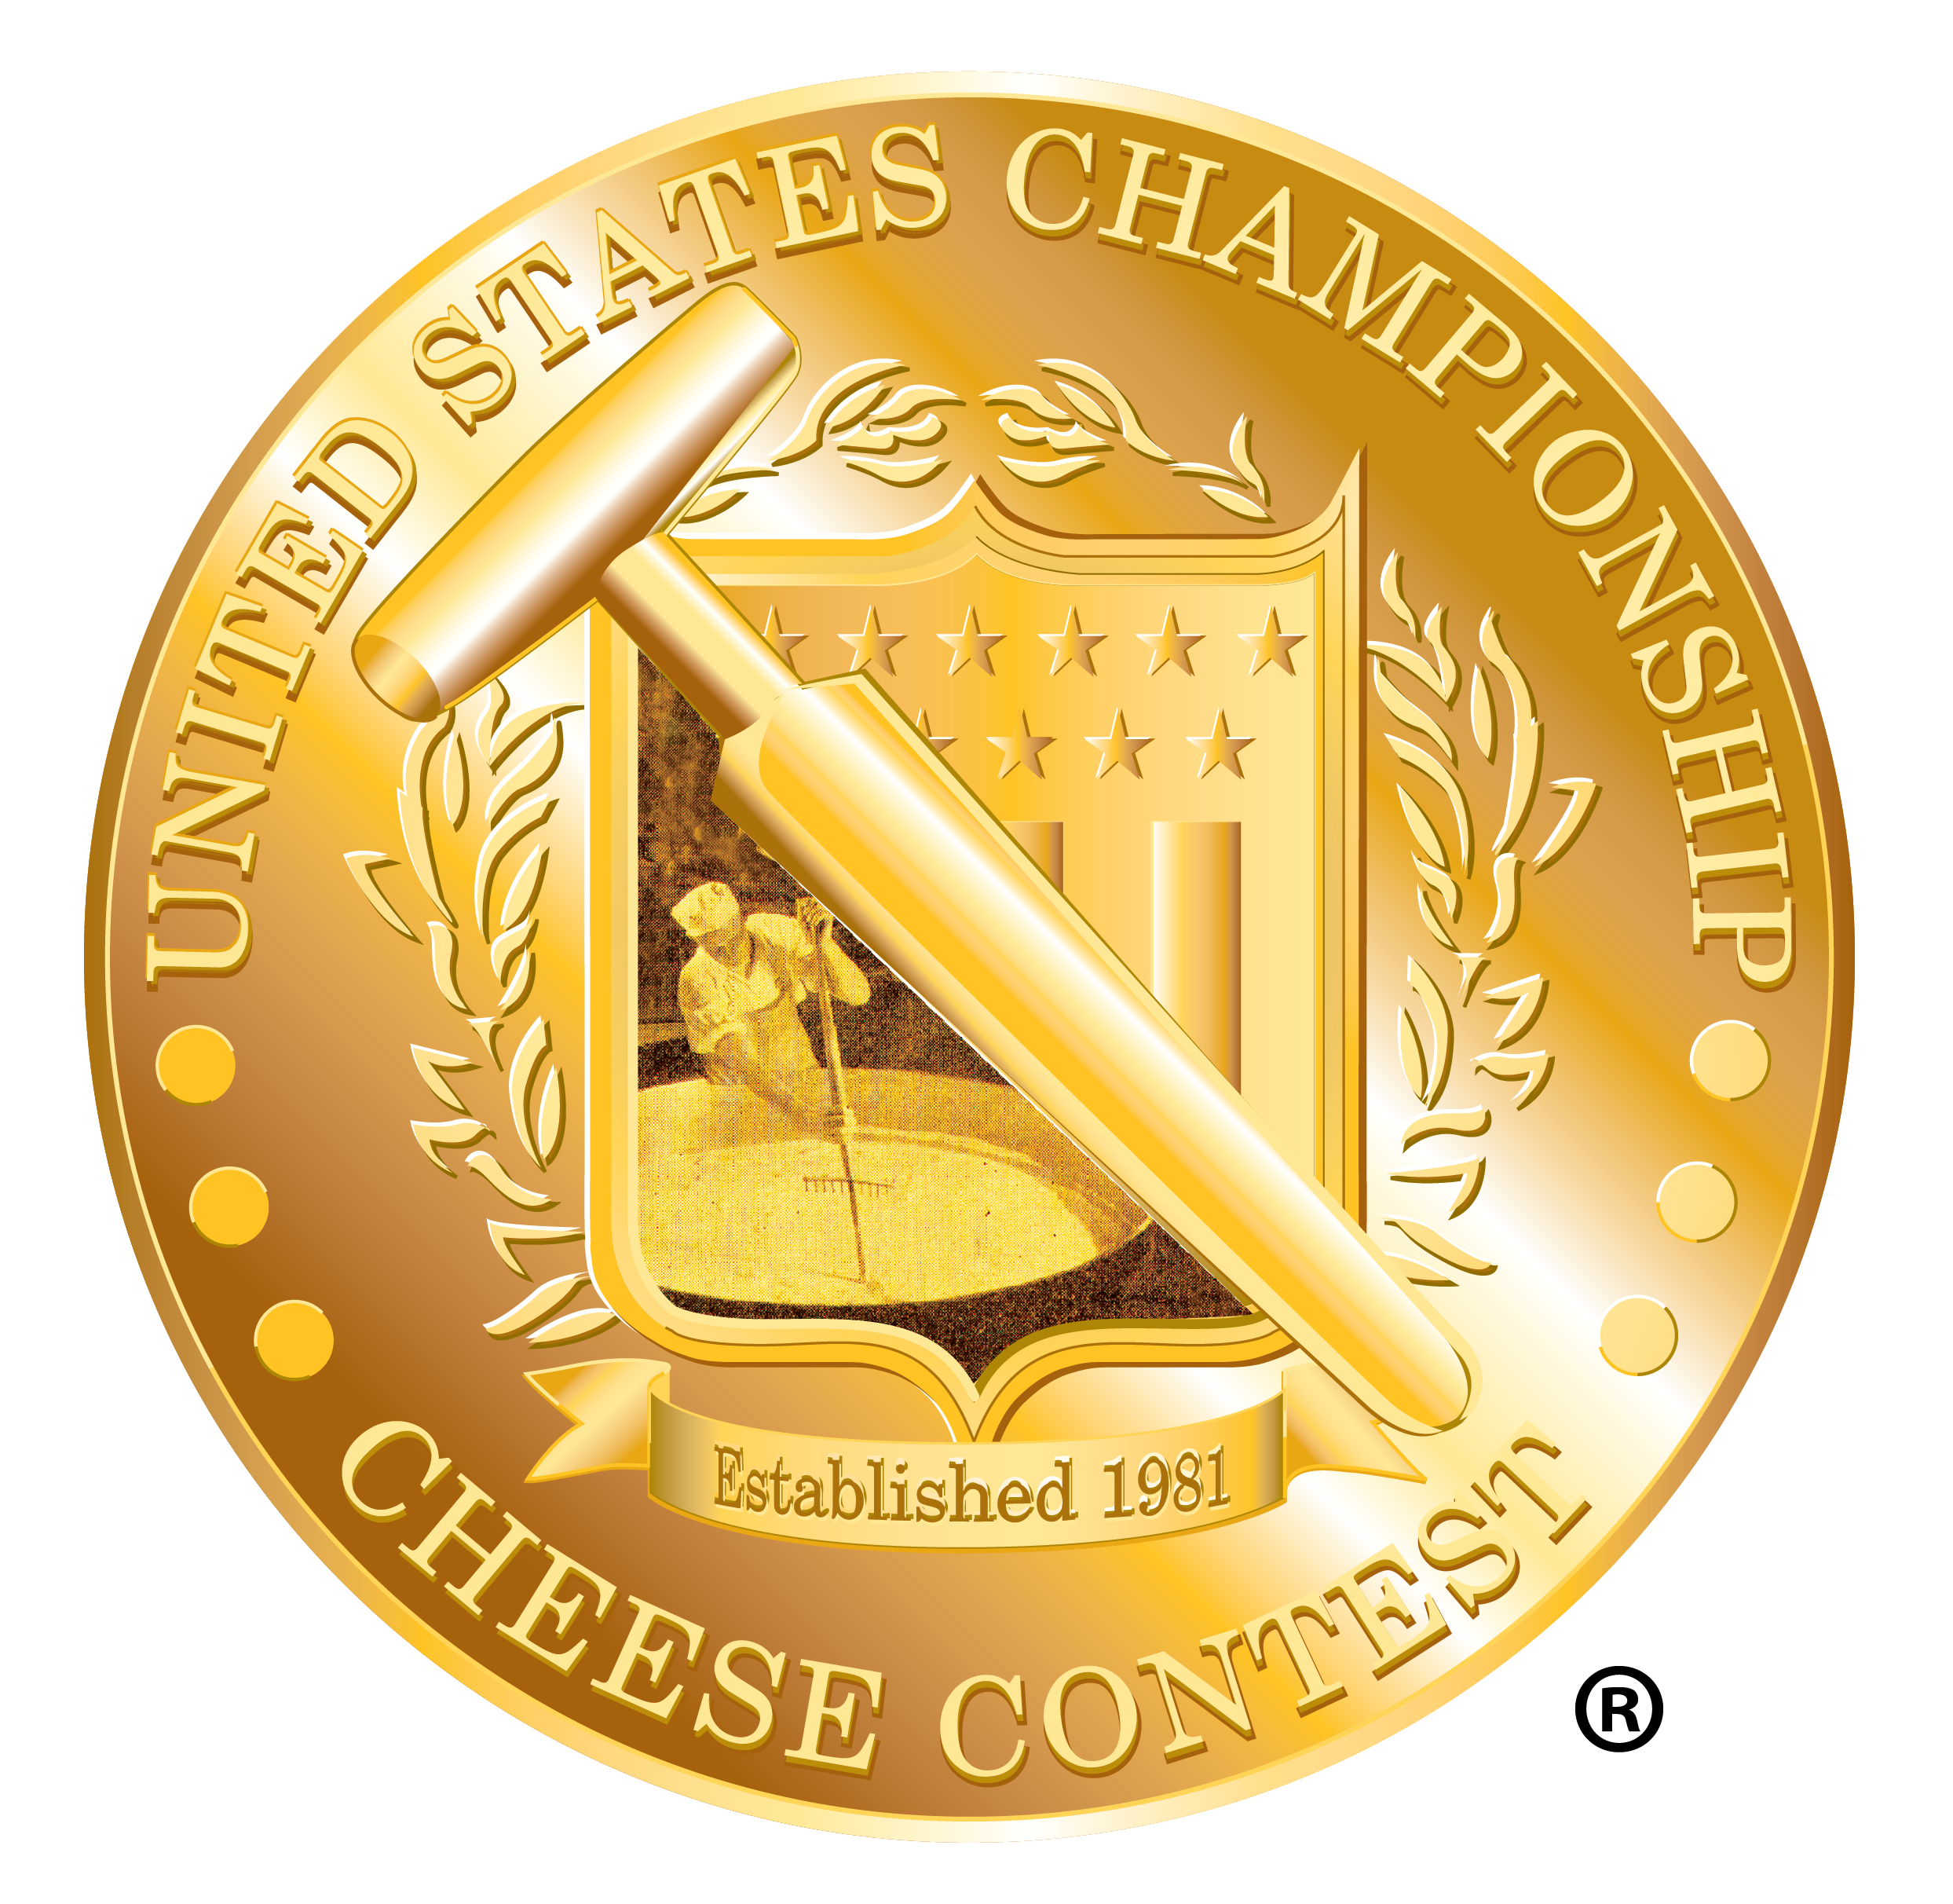 U.S. Championship Cheese Contest